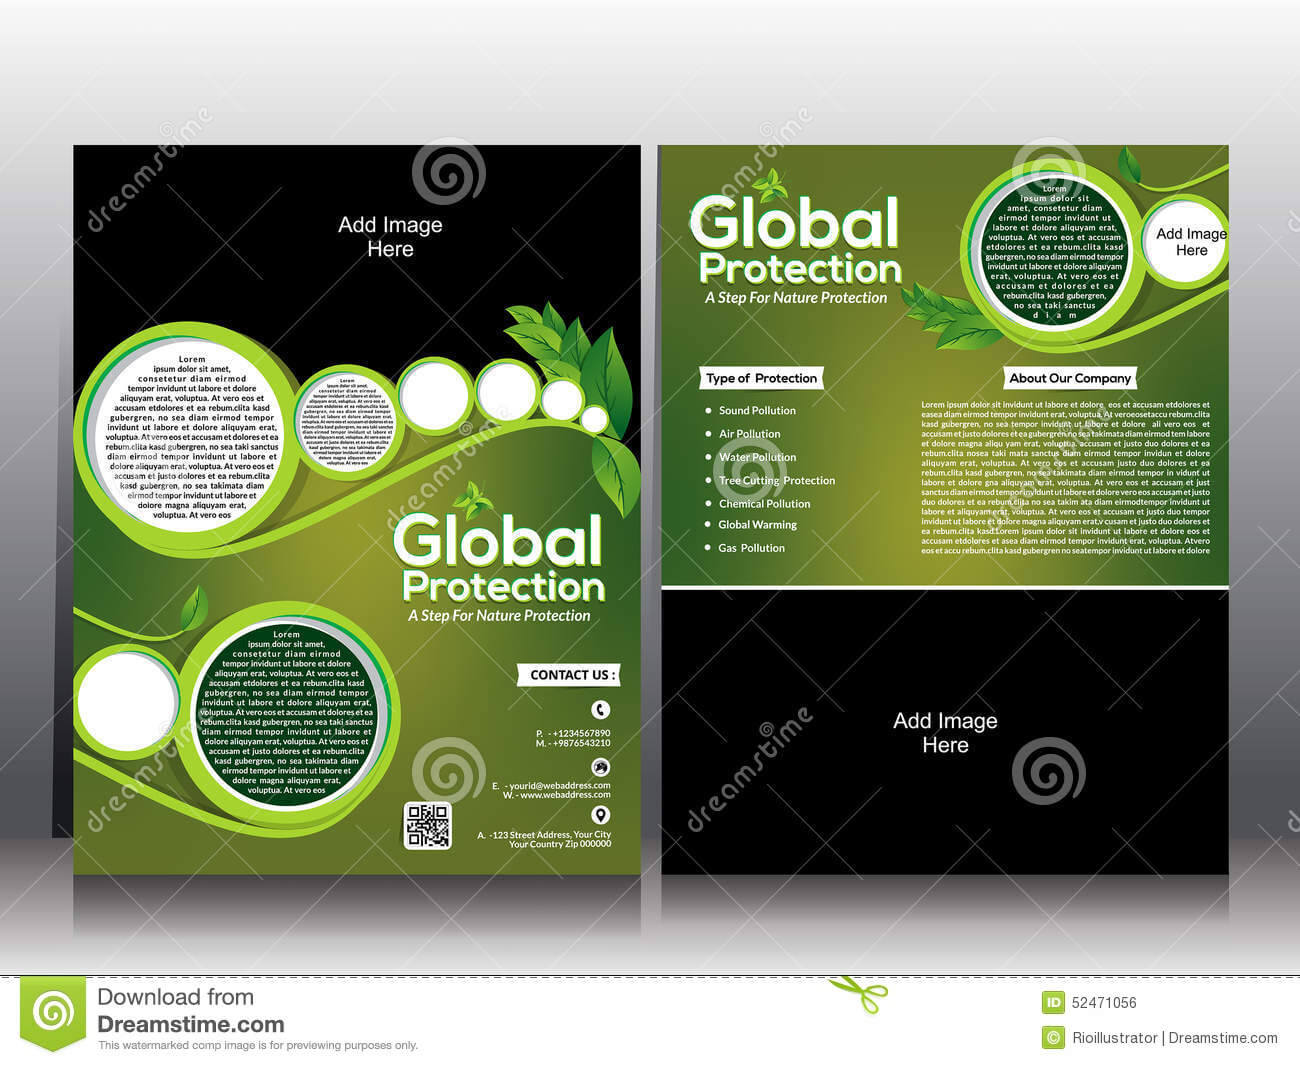 Brochure Template Illustrator Free Download | How To Design With Adobe Illustrator Brochure Templates Free Download